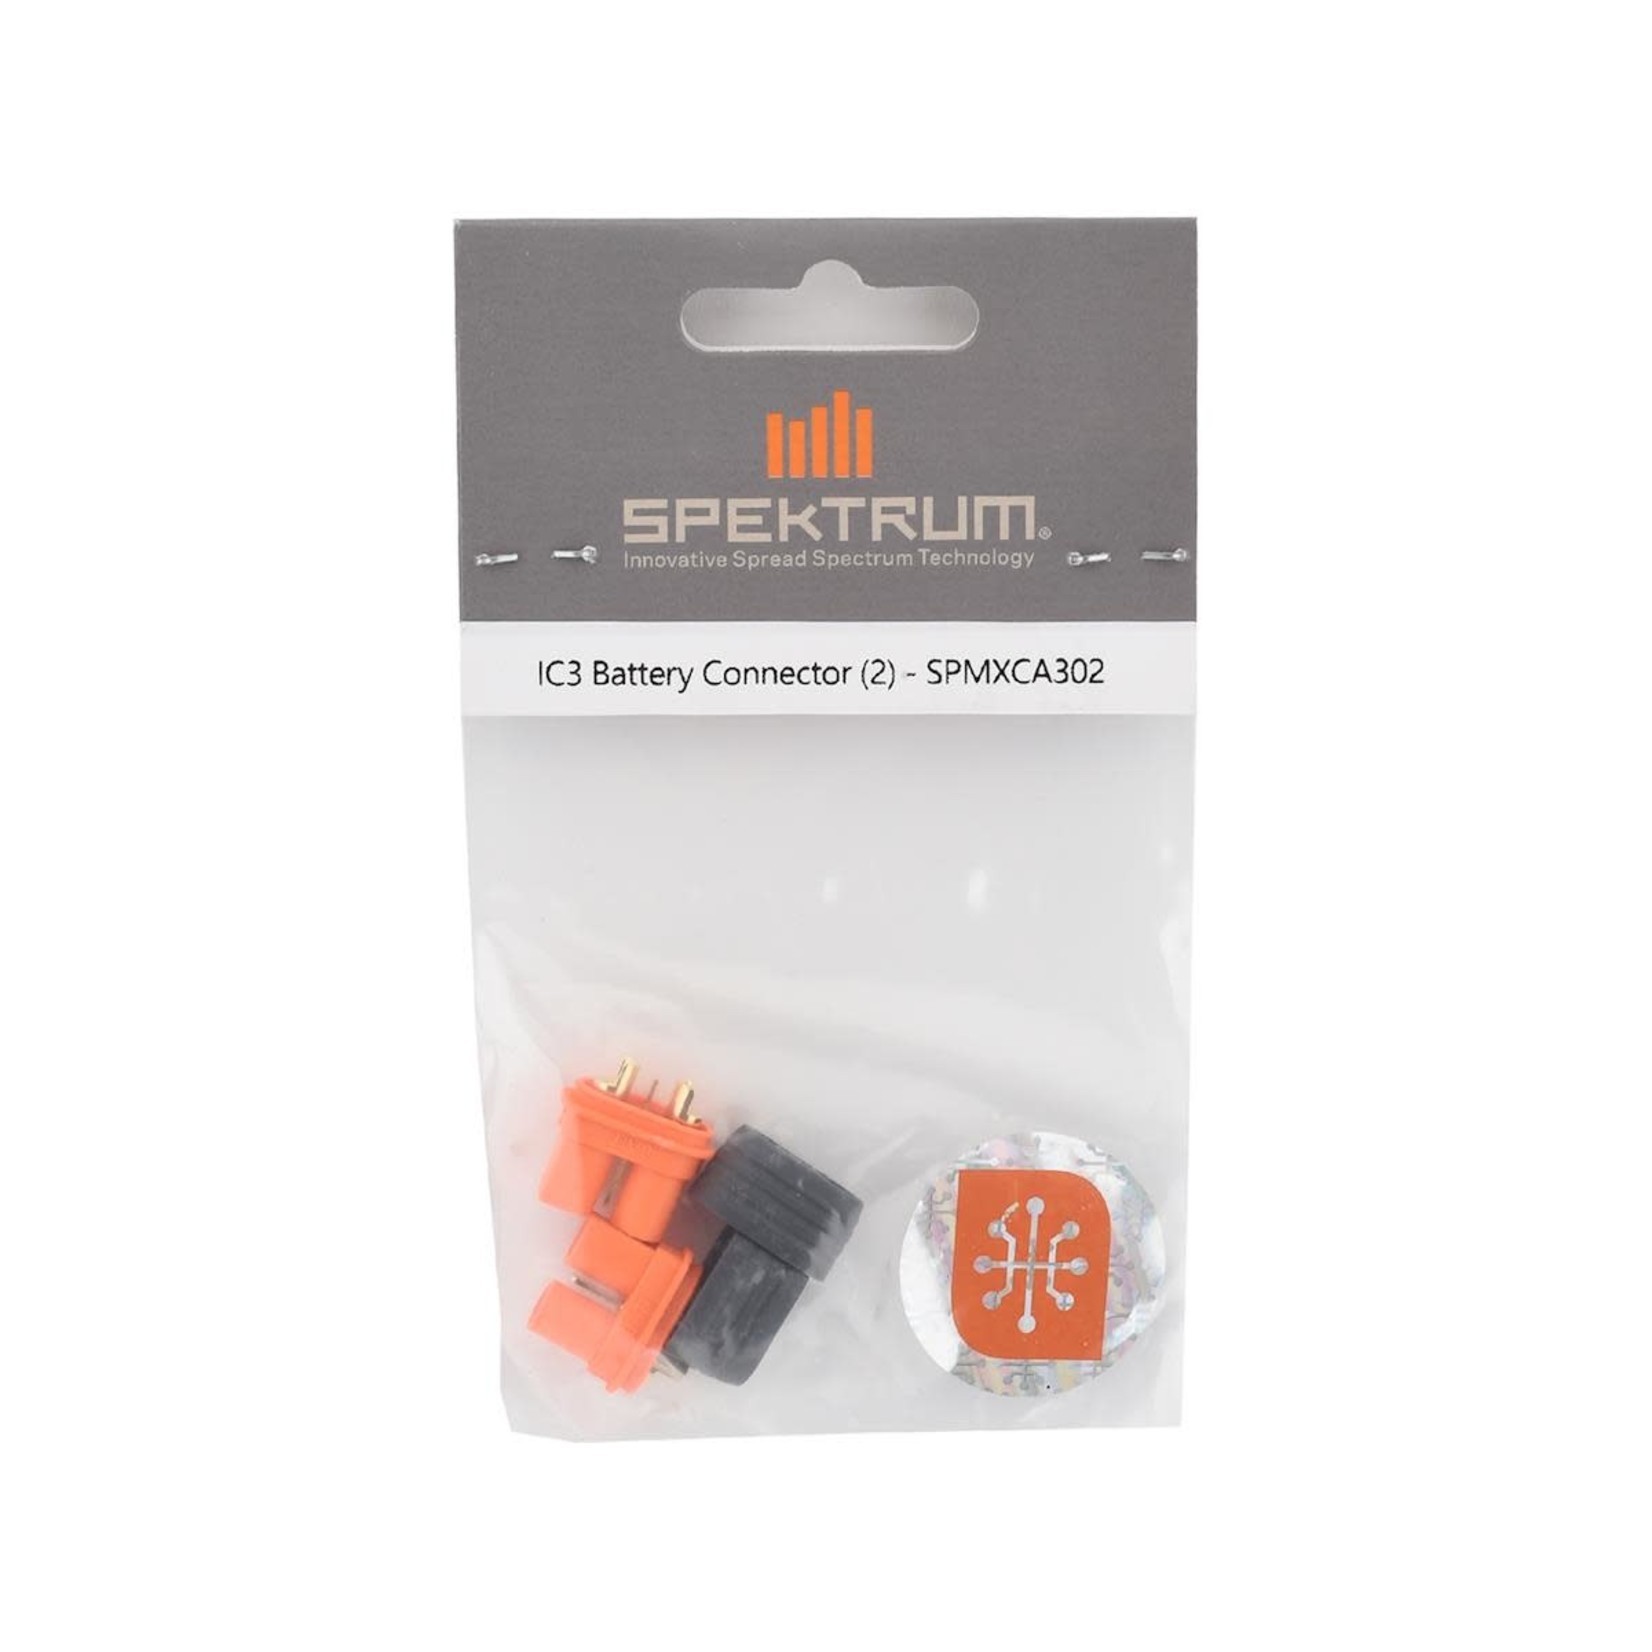 Spektrum Spektrum RC IC3 Battery Connector (2) (Female) #SPMXCA302